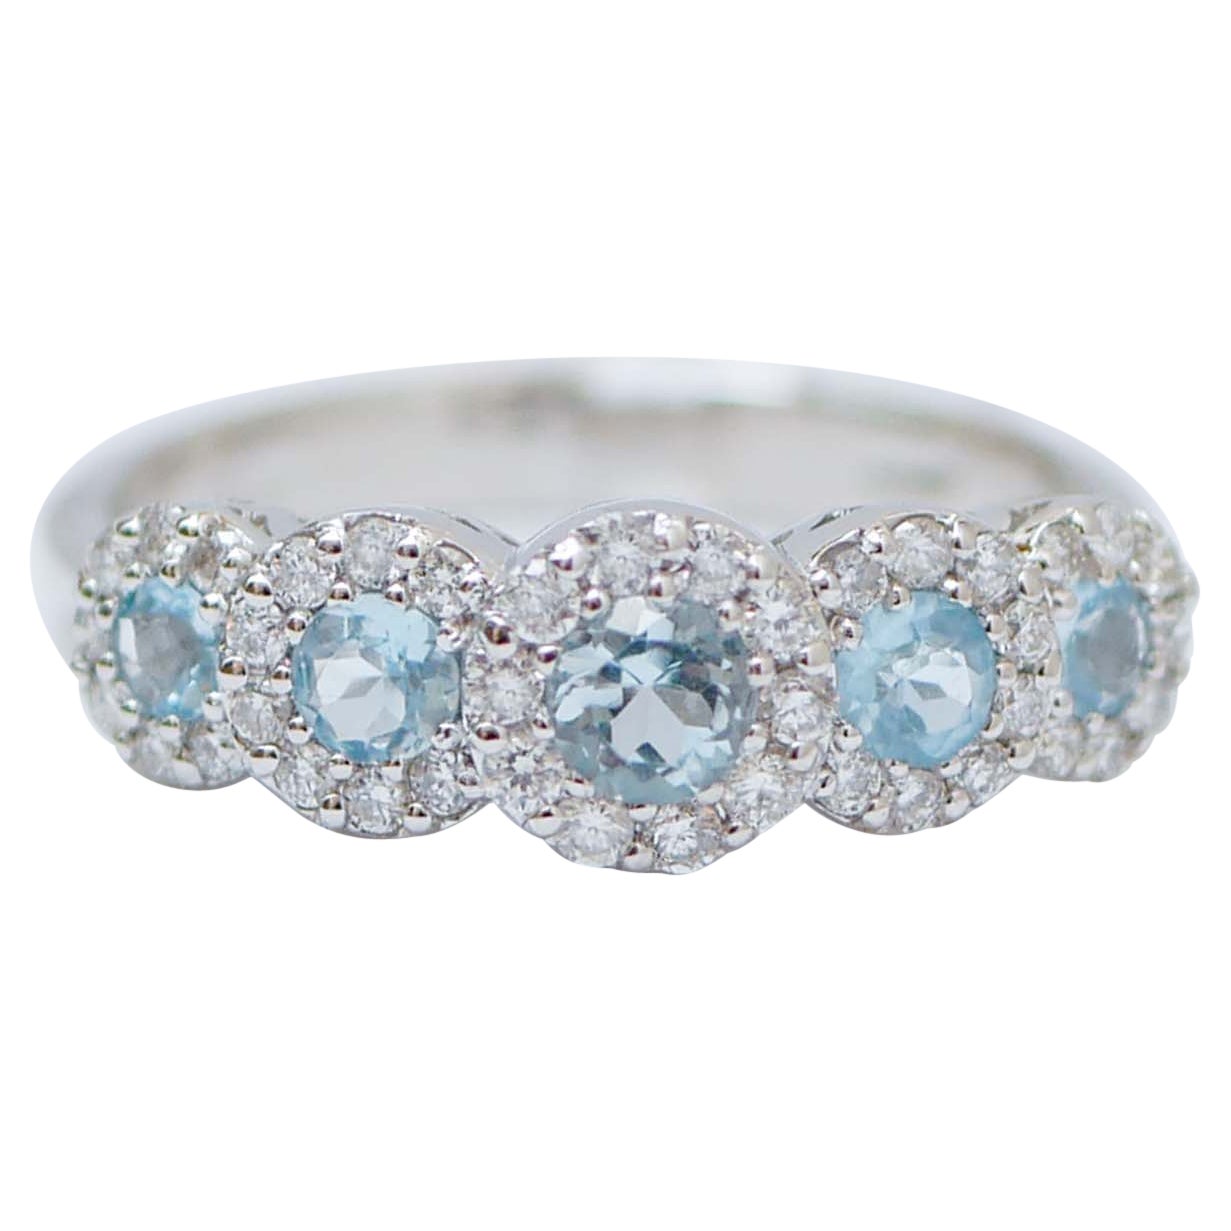 Aquamarine, Diamonds, 18 Karat White Gold Ring. For Sale